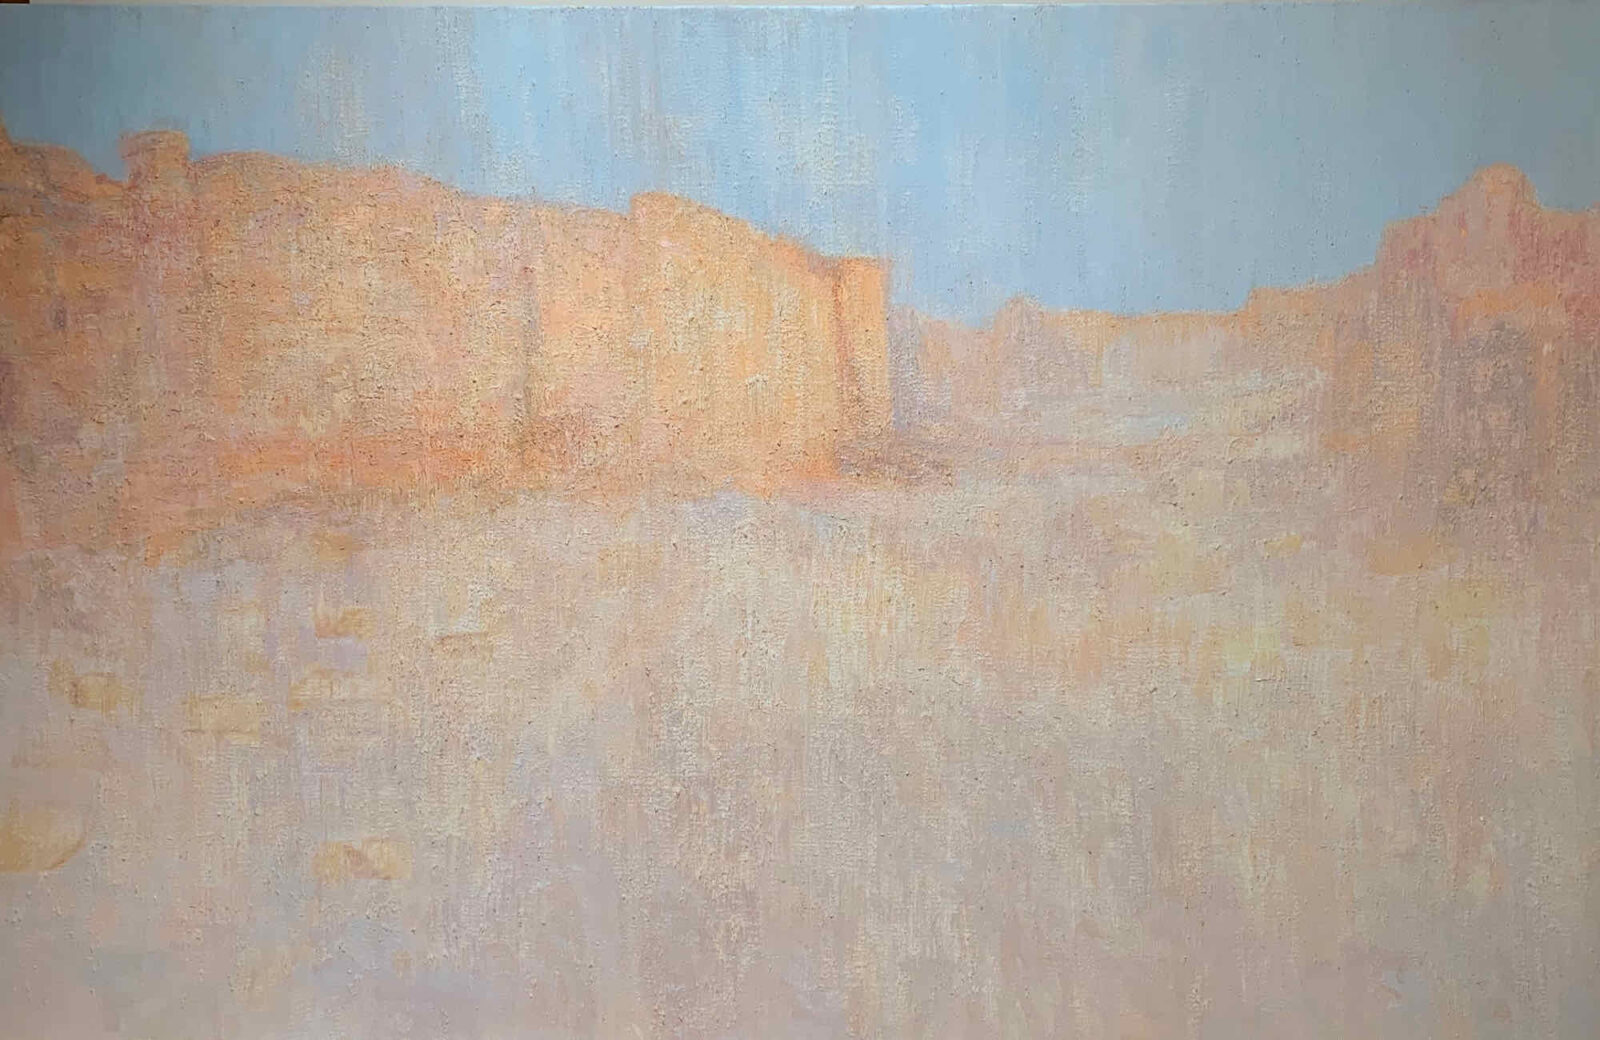 Liza Visagie - Desert Road. Rajasthan. Oil on Linen 53 x 83.5 inches